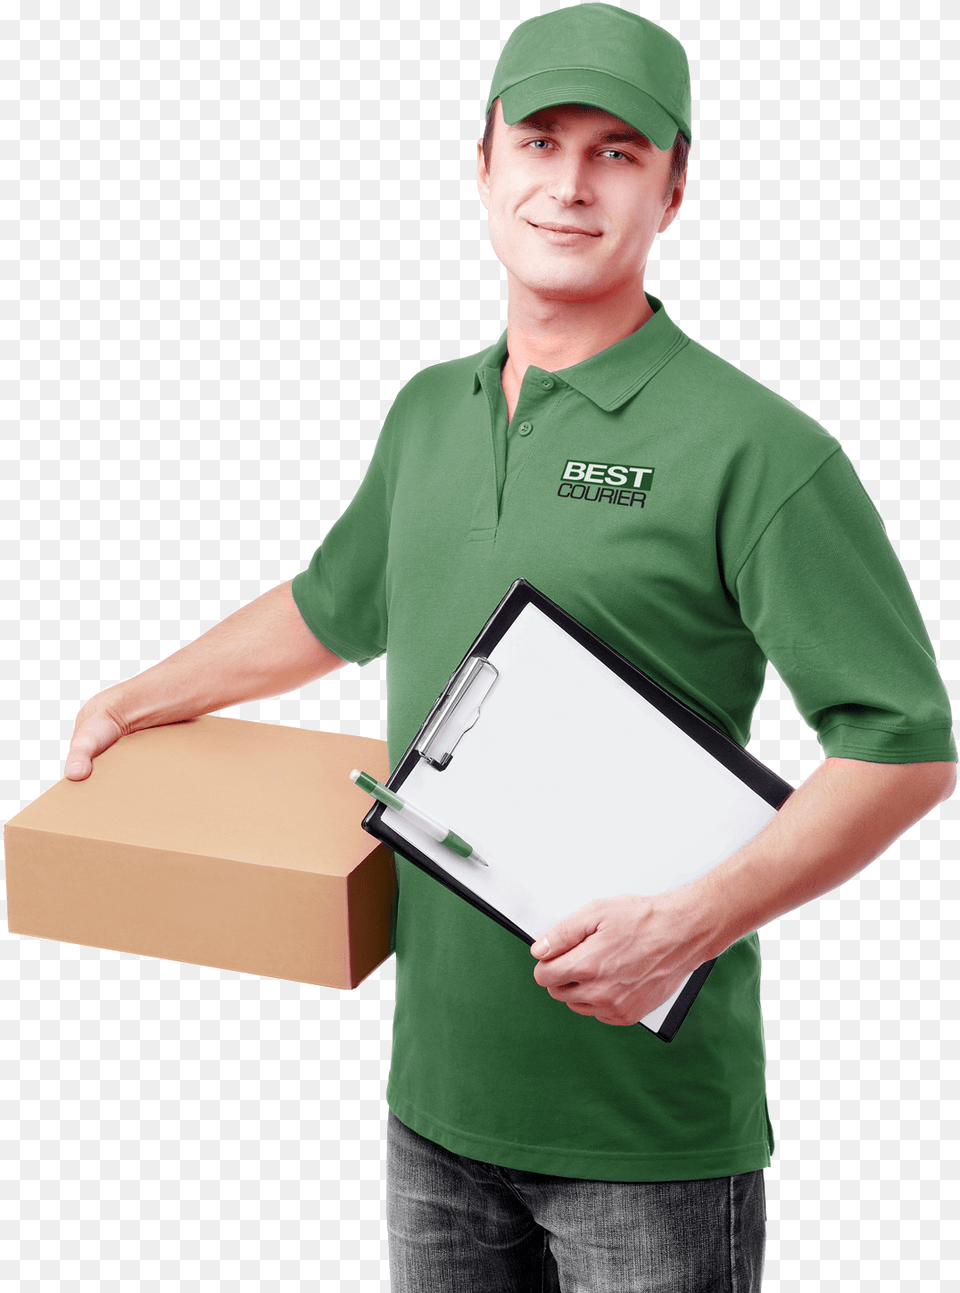 Delivery Man, Person, Box, Cardboard, Carton Png Image